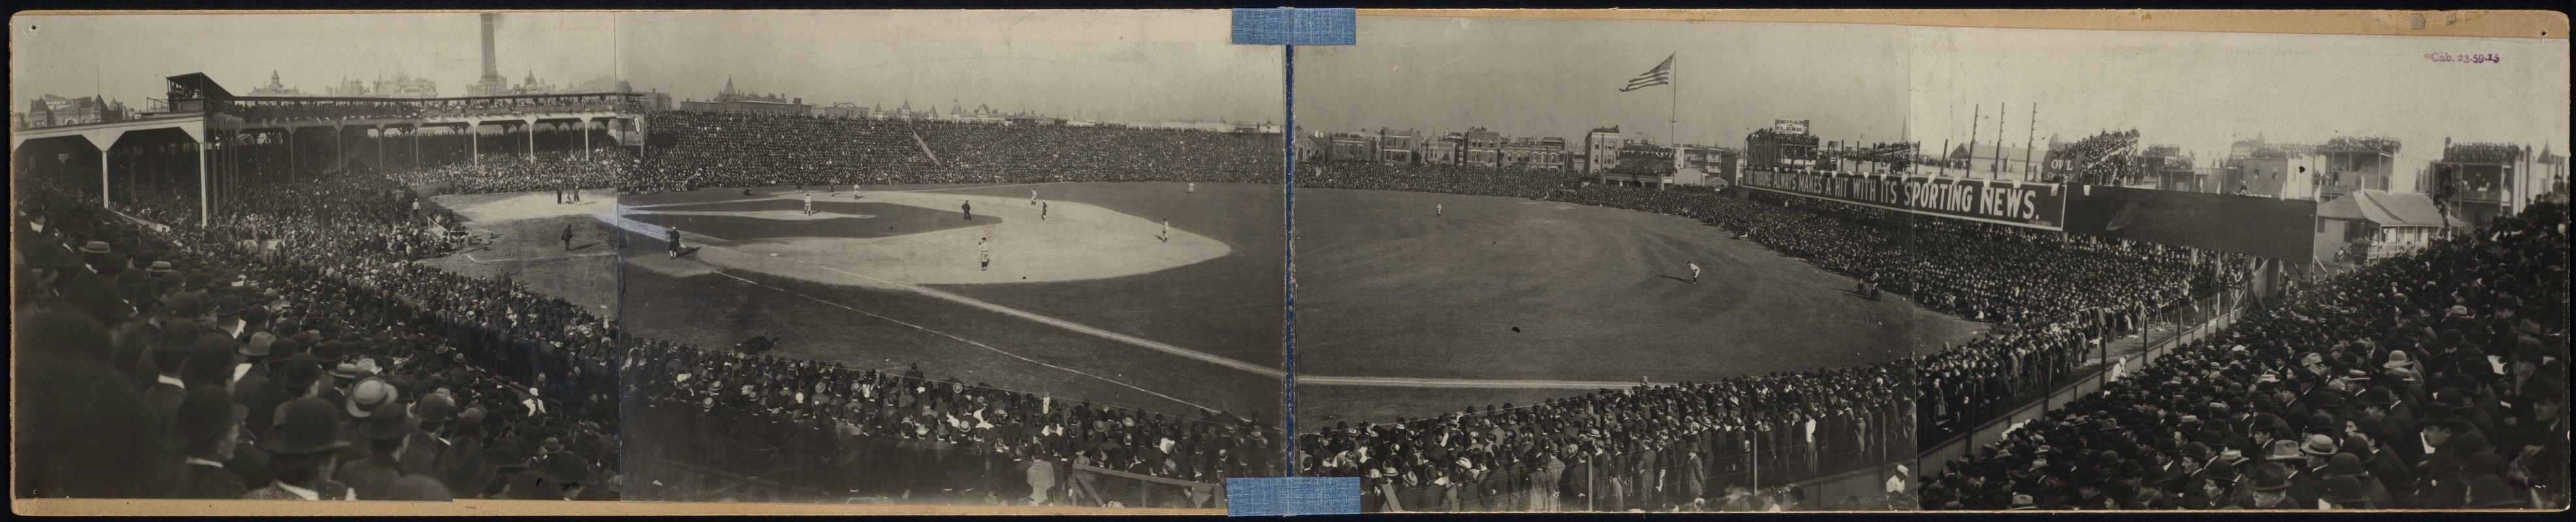 West Side Park, Chicago, 1906 World Series - Digital Commonwealth